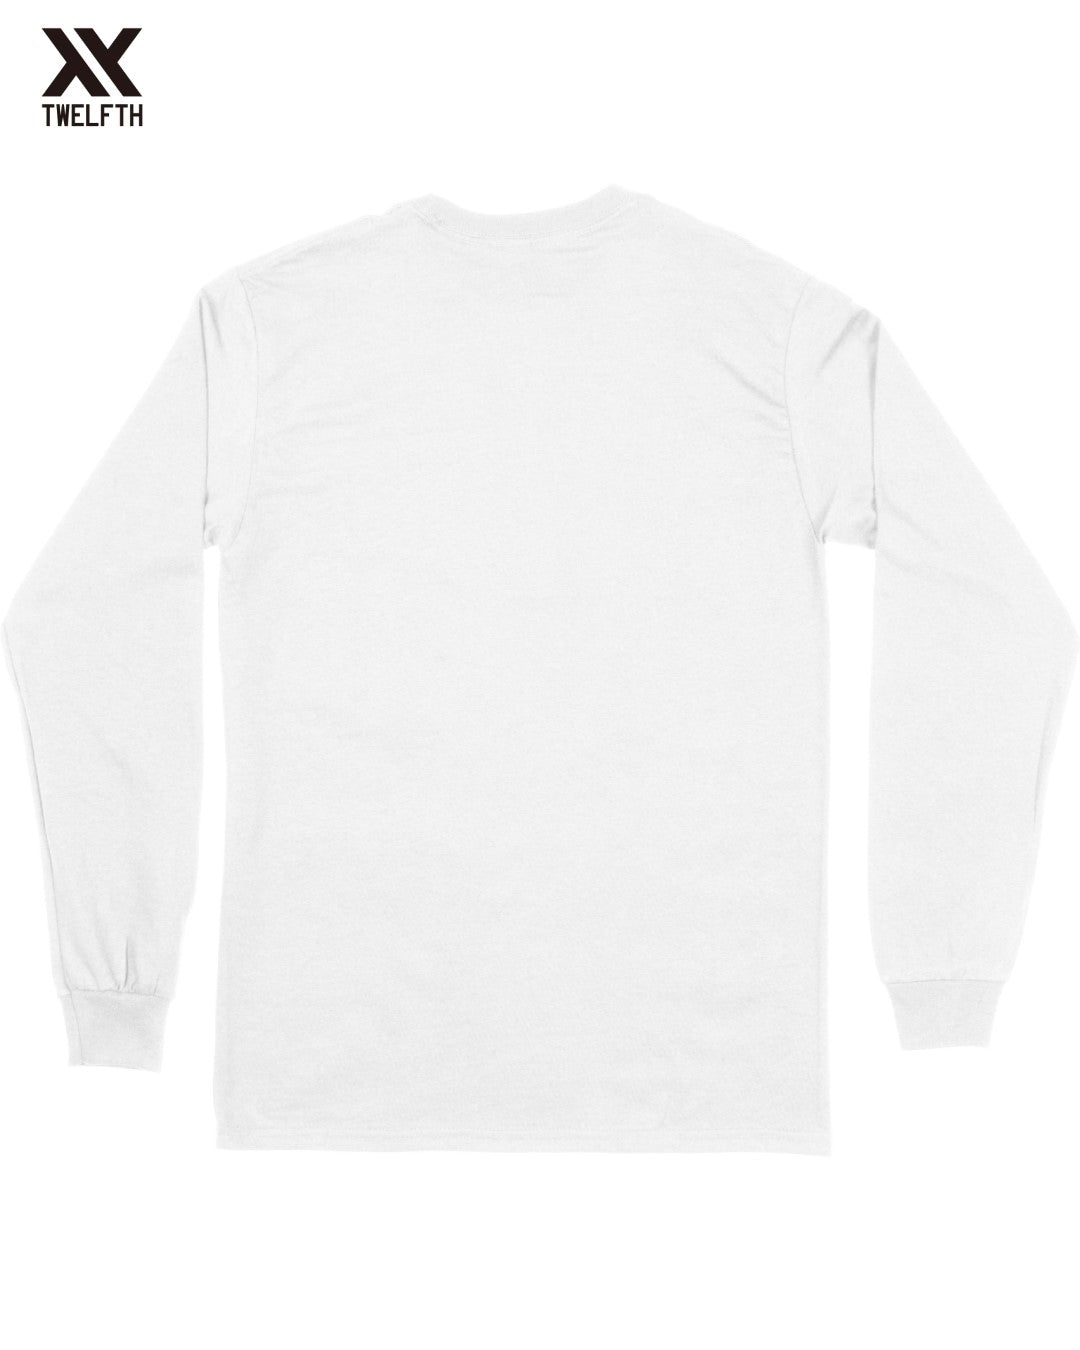 Napoli Crest T-Shirt - Mens - Long Sleeve